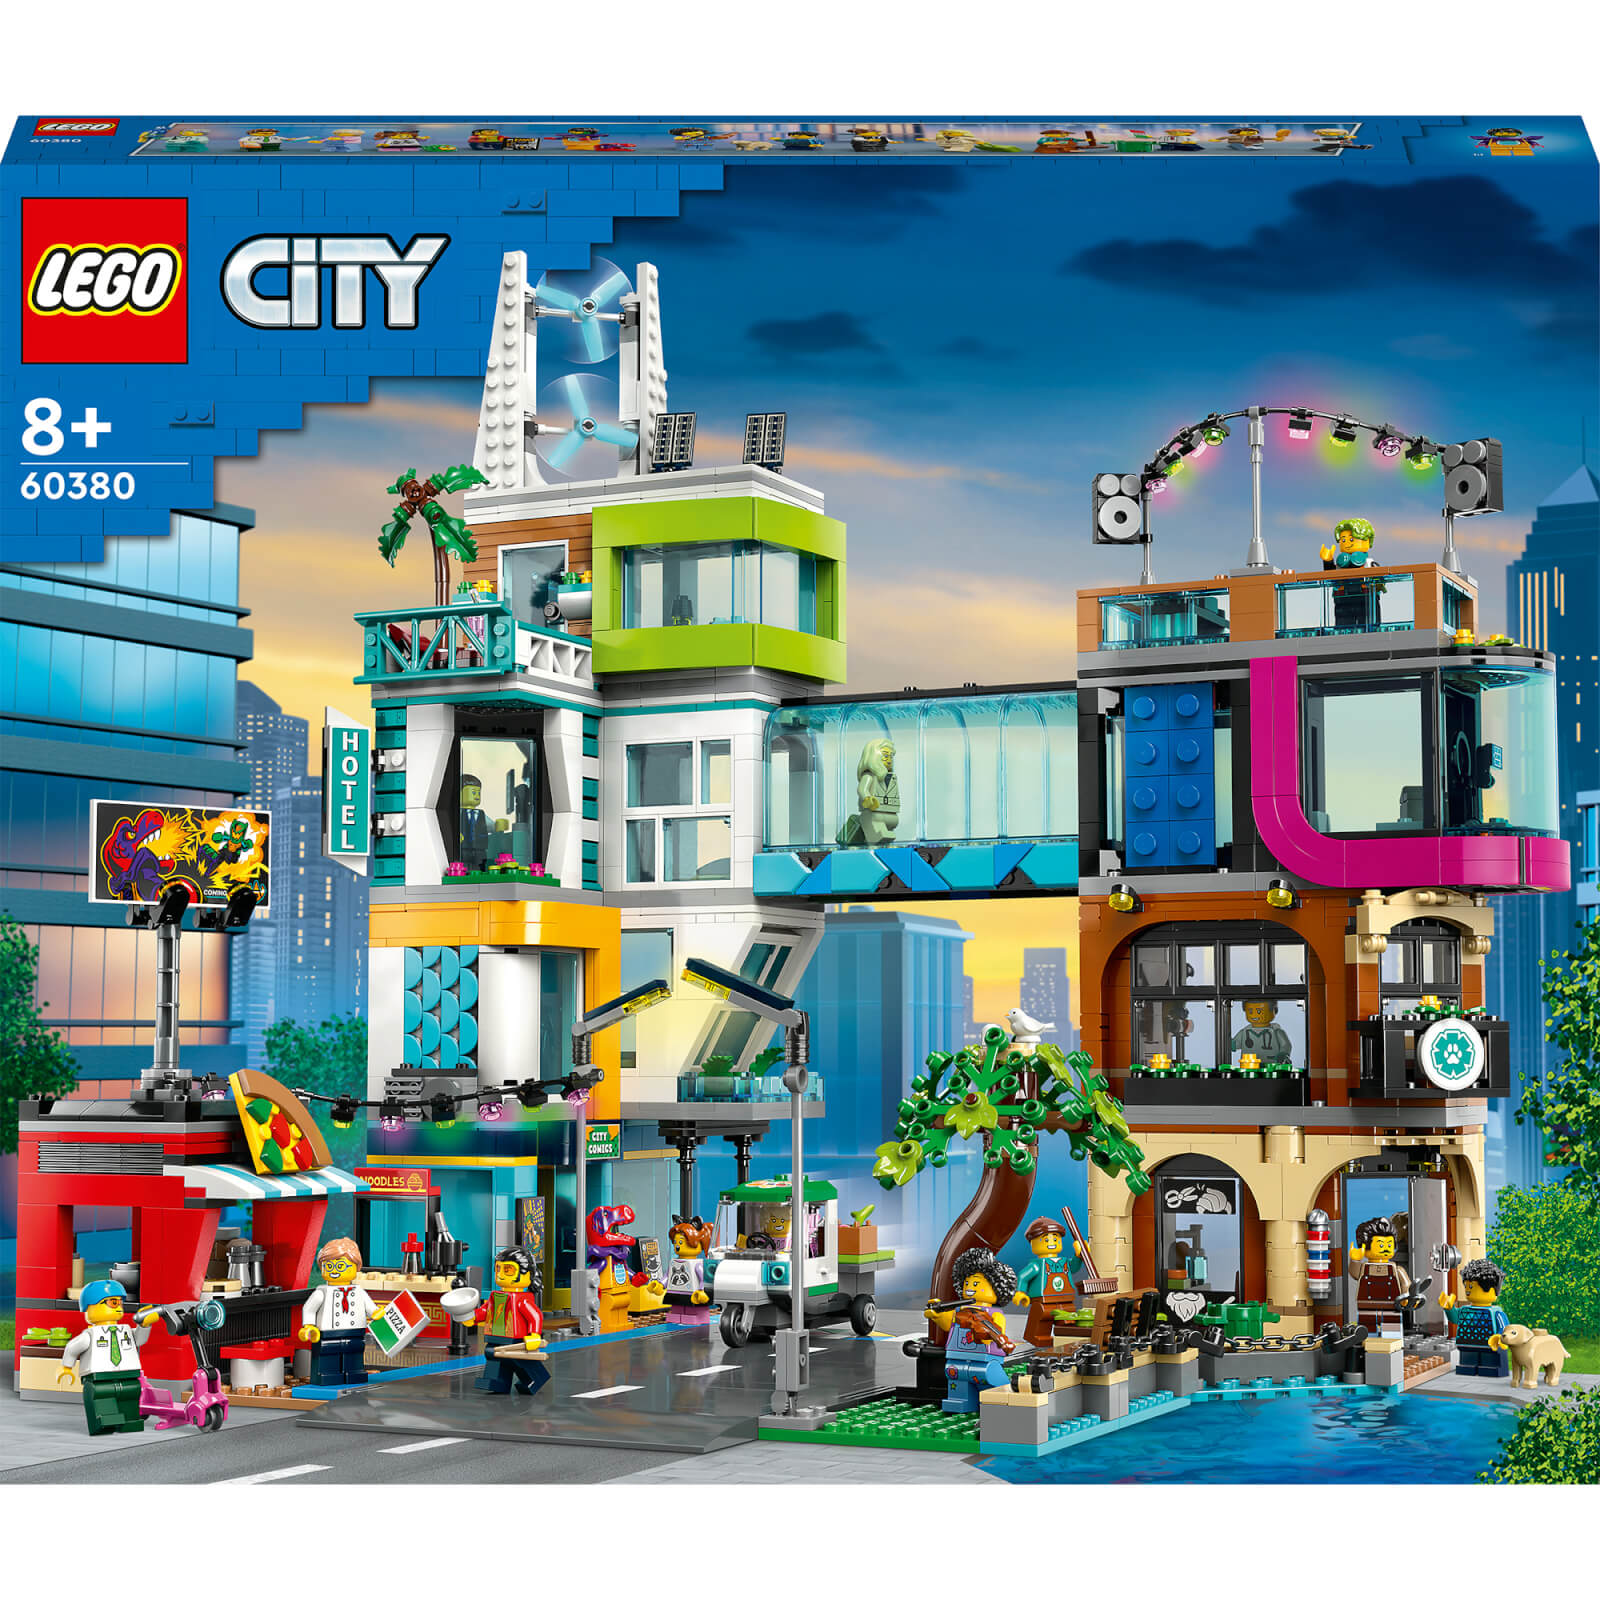 LEGO City: Centre Reconfigurable Modular Building Set (60380)